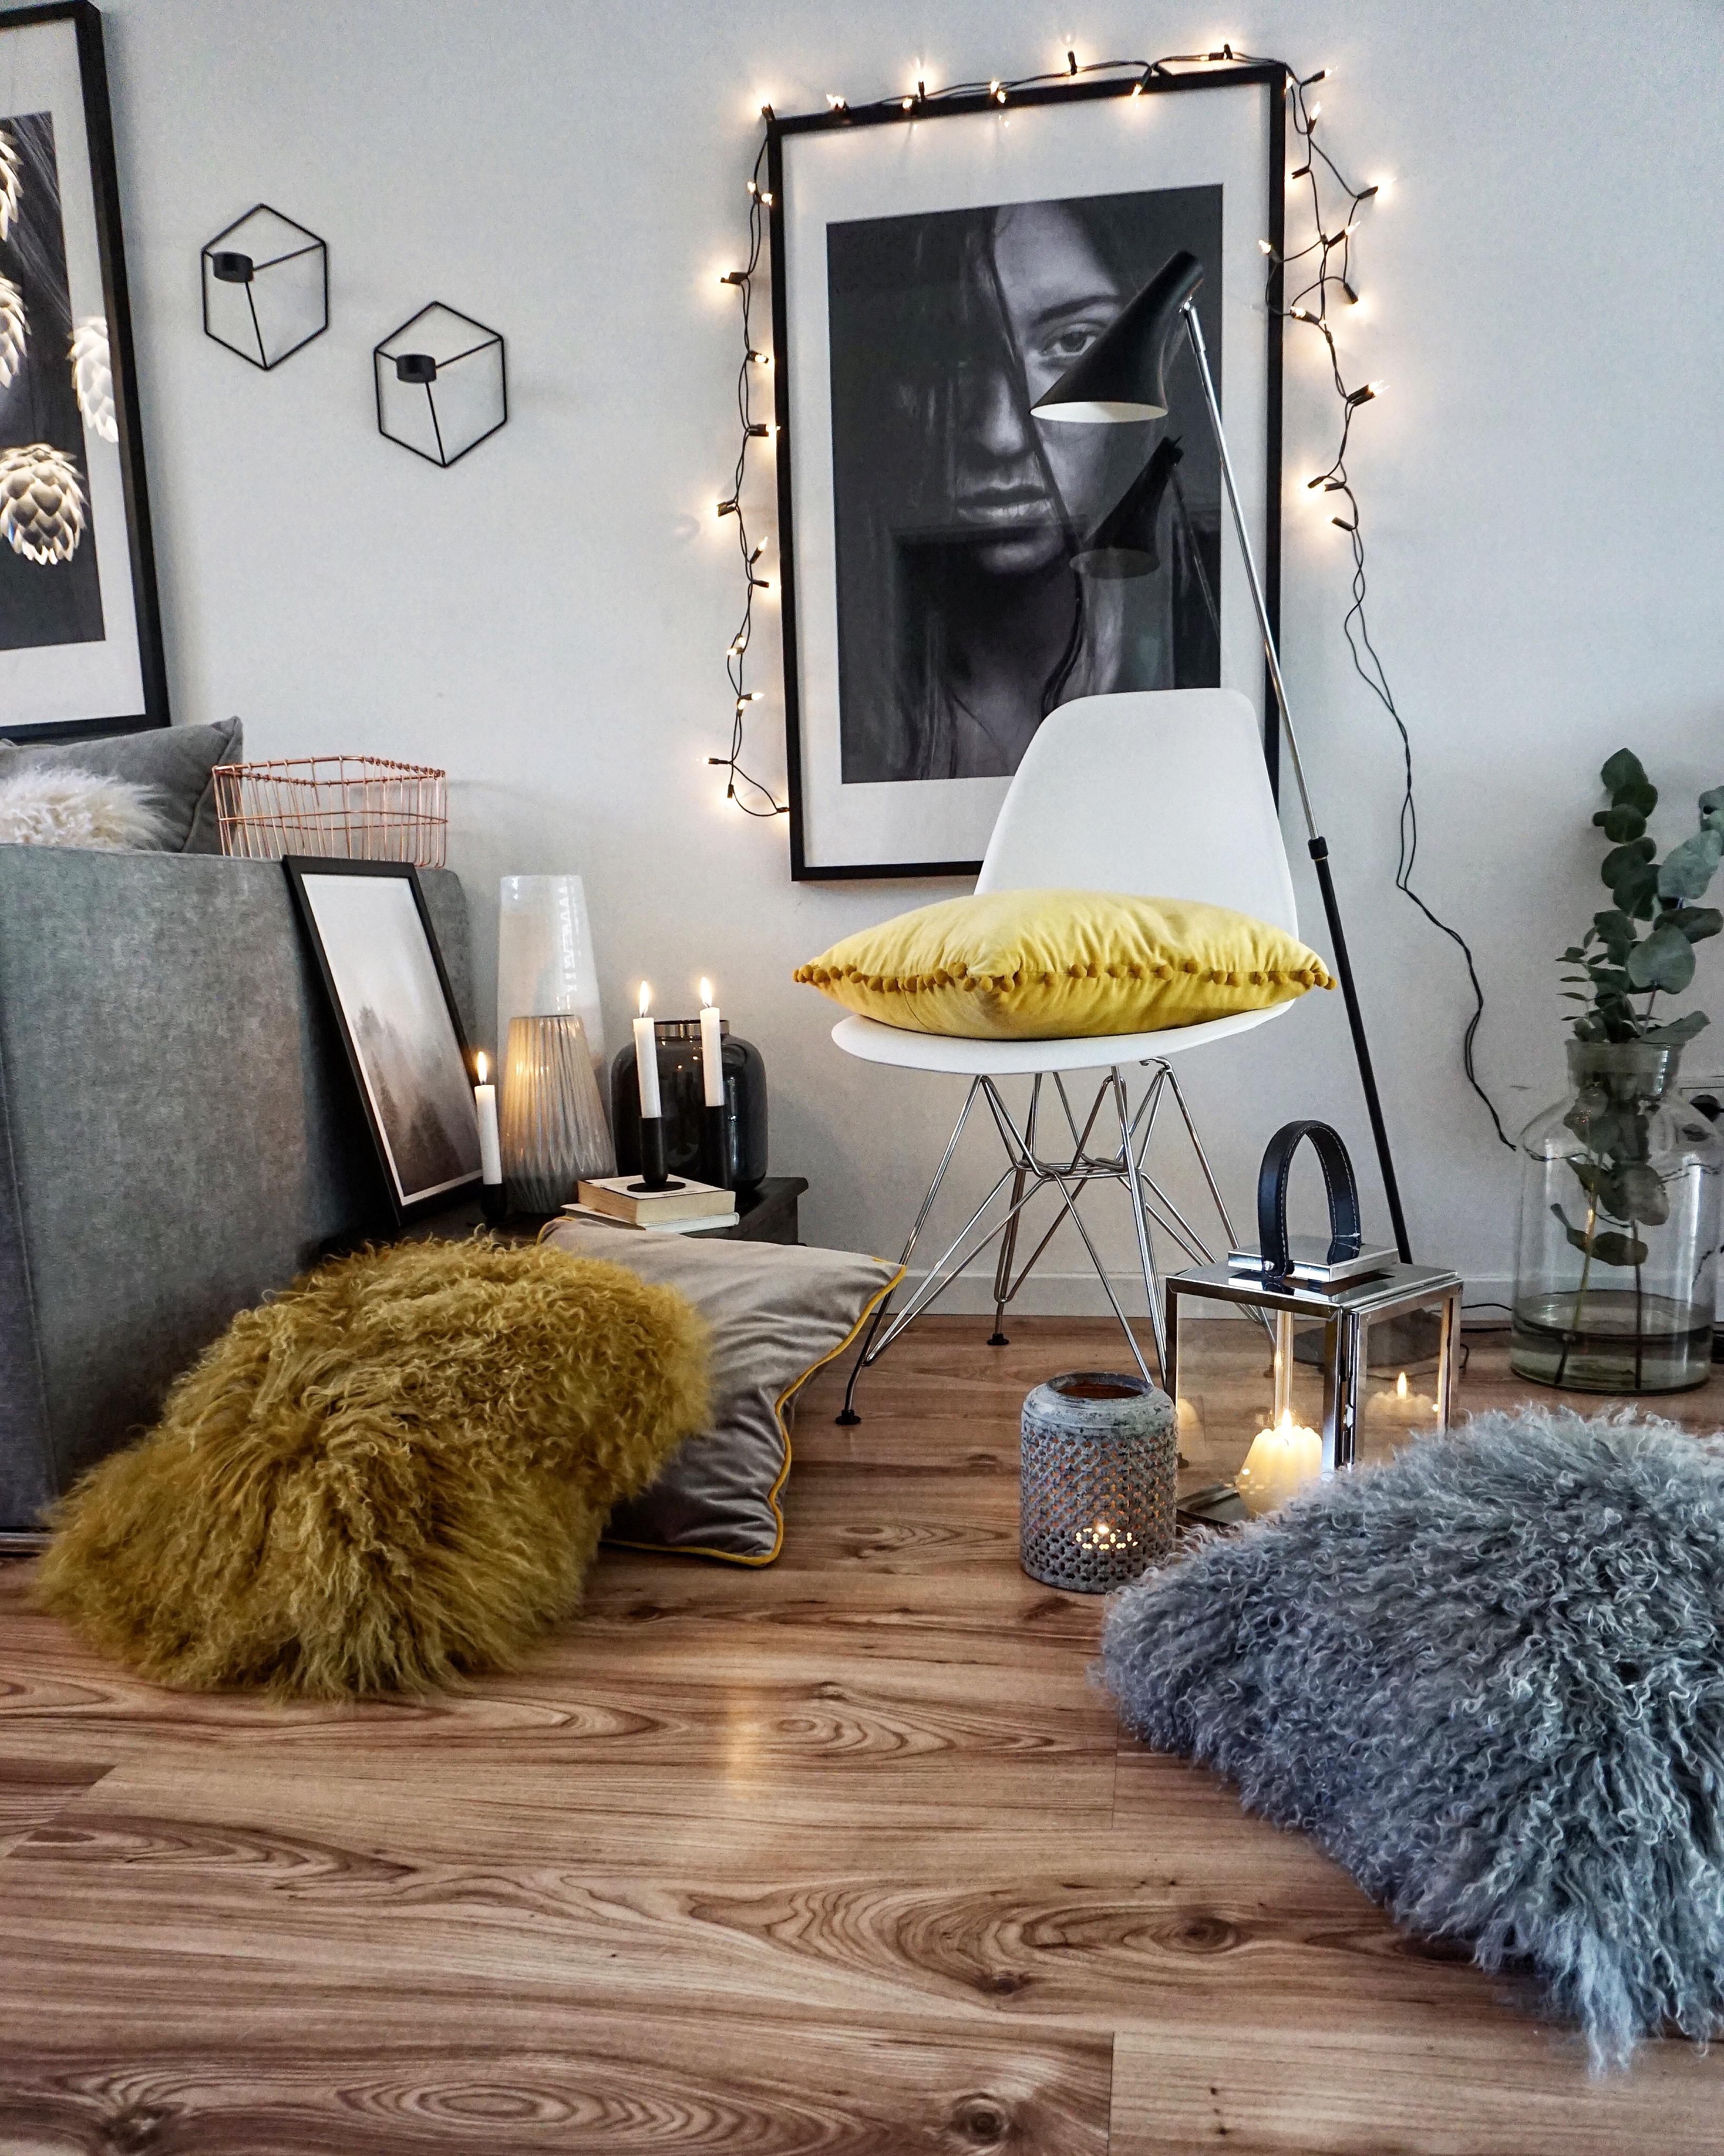 Sofa 'Newman' im Wohnzimmer der Bloggerin easyinterieur #ecksofa #sofa #grauessofa #weihnachtsdeko ©Amaris Elements